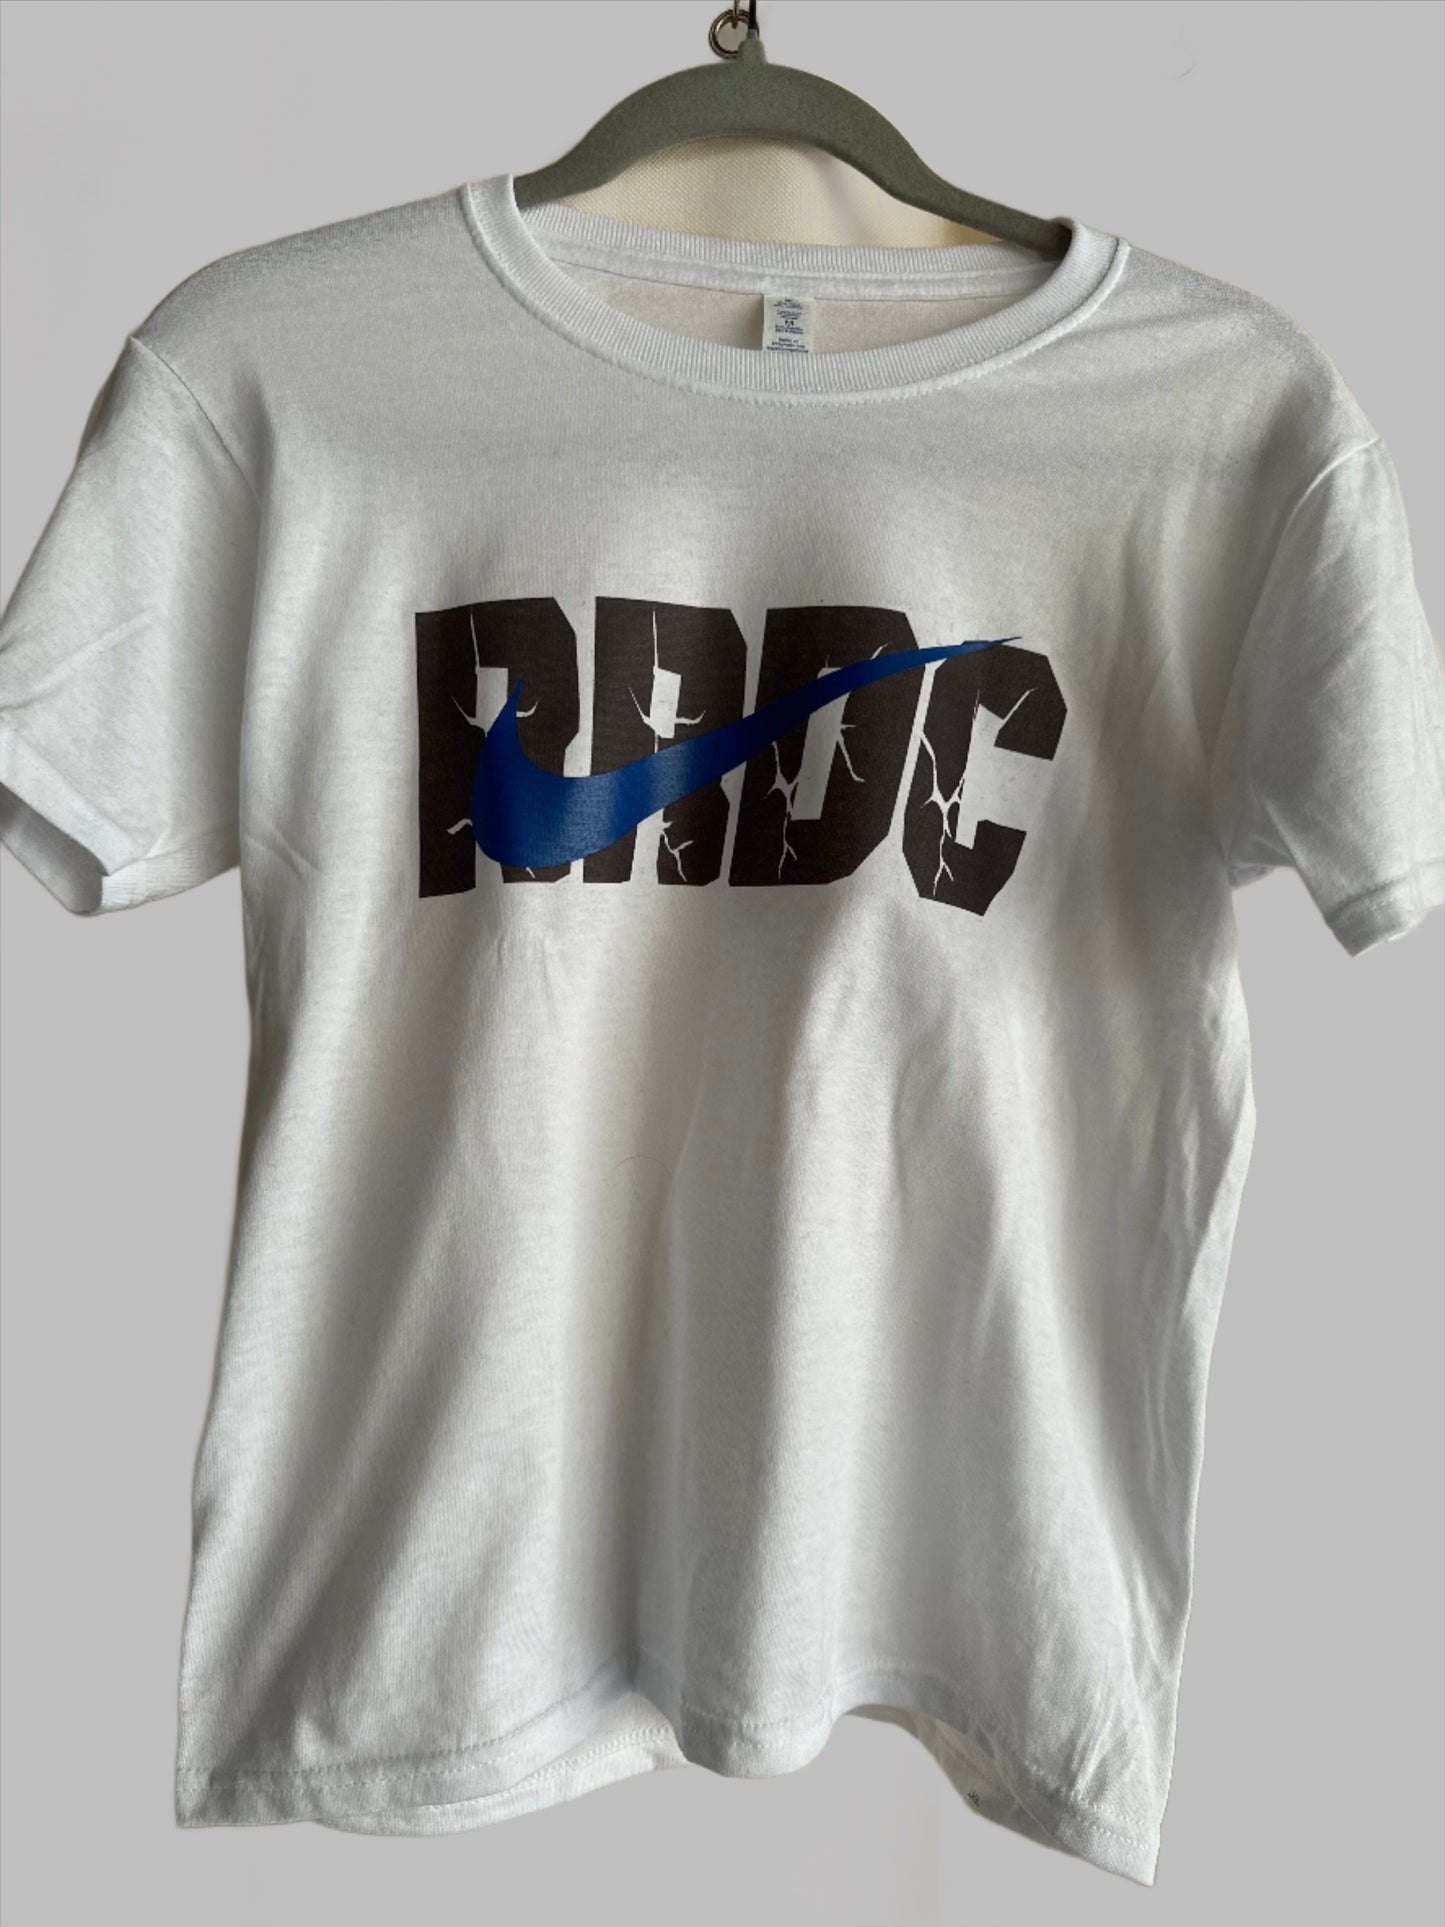 RRDC Swoosh T-Shirt